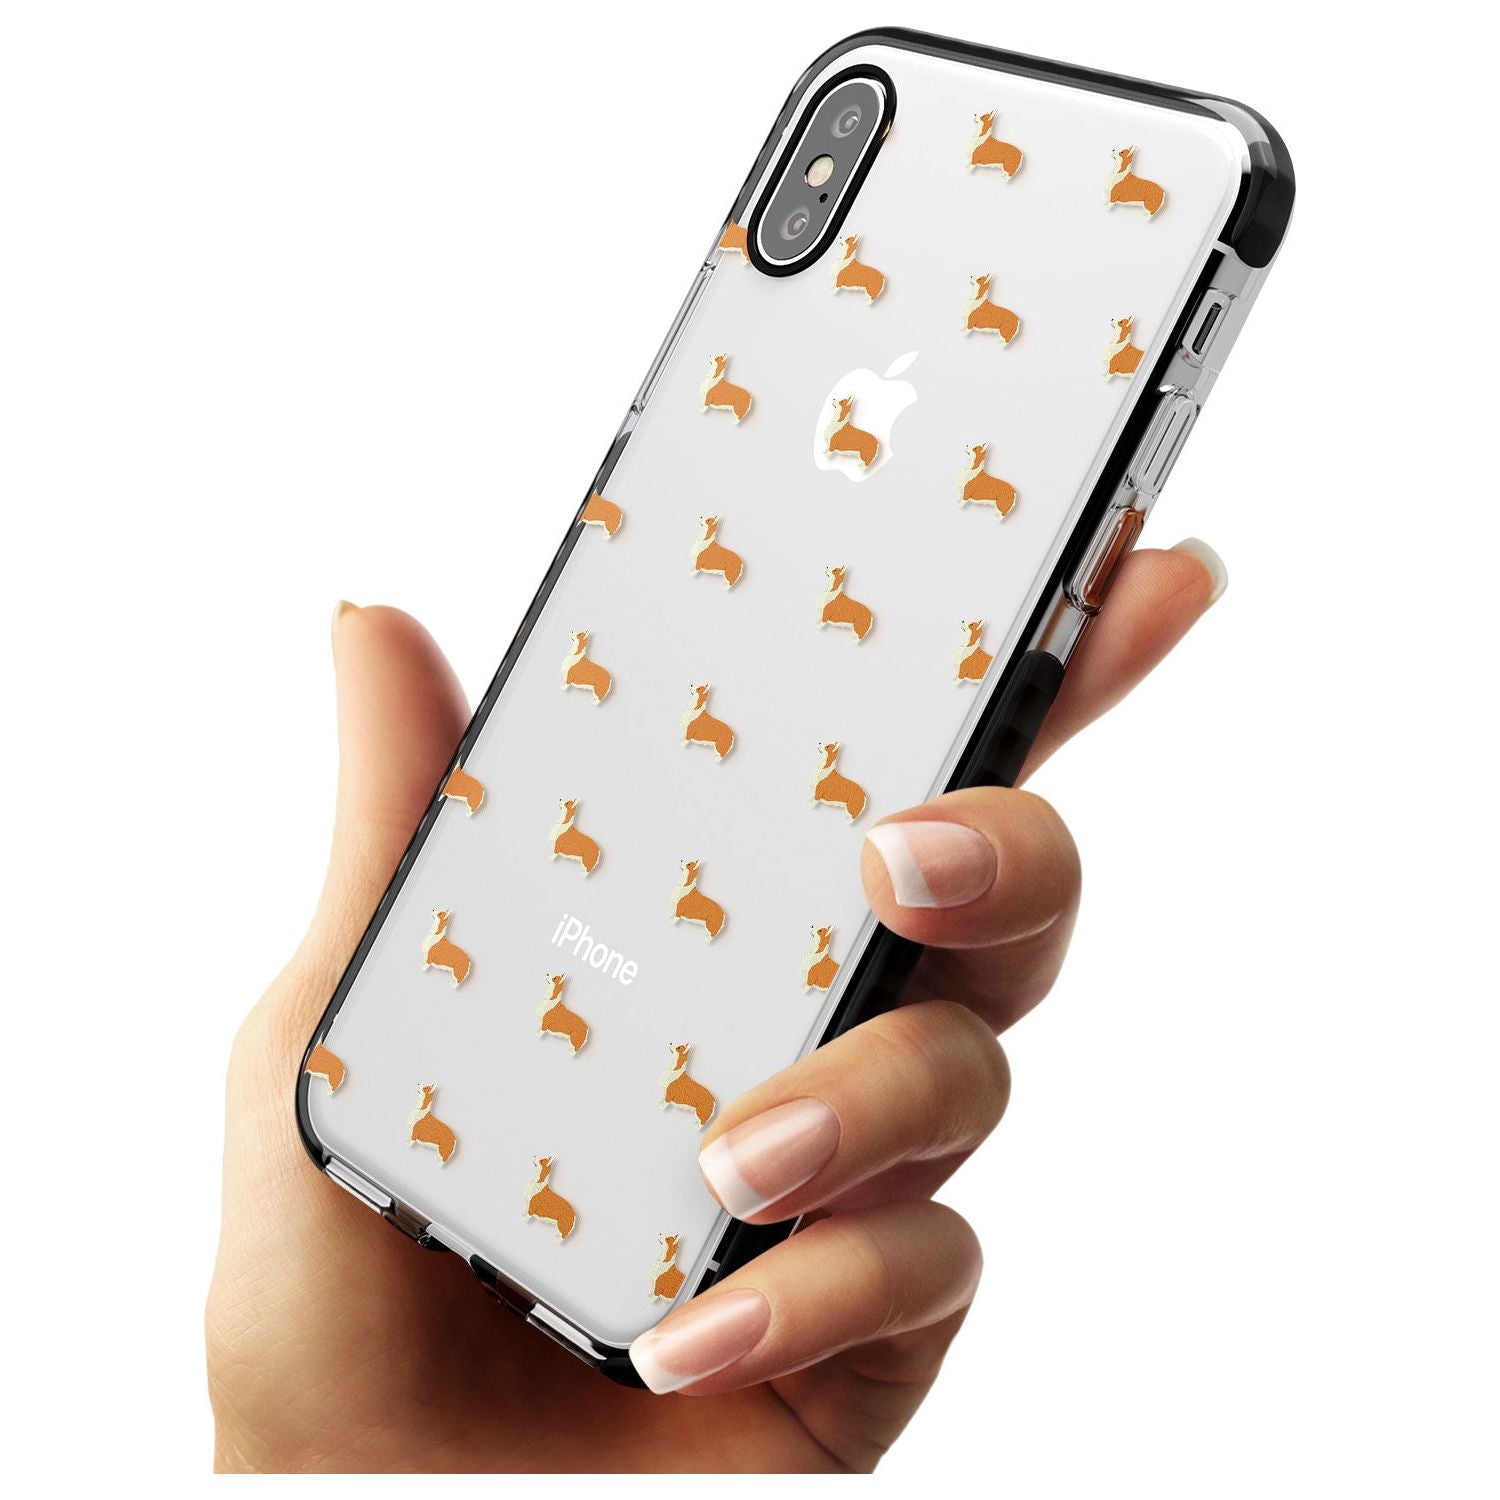 Pembroke Welsh Corgi Dog Pattern Clear Black Impact Phone Case for iPhone X XS Max XR